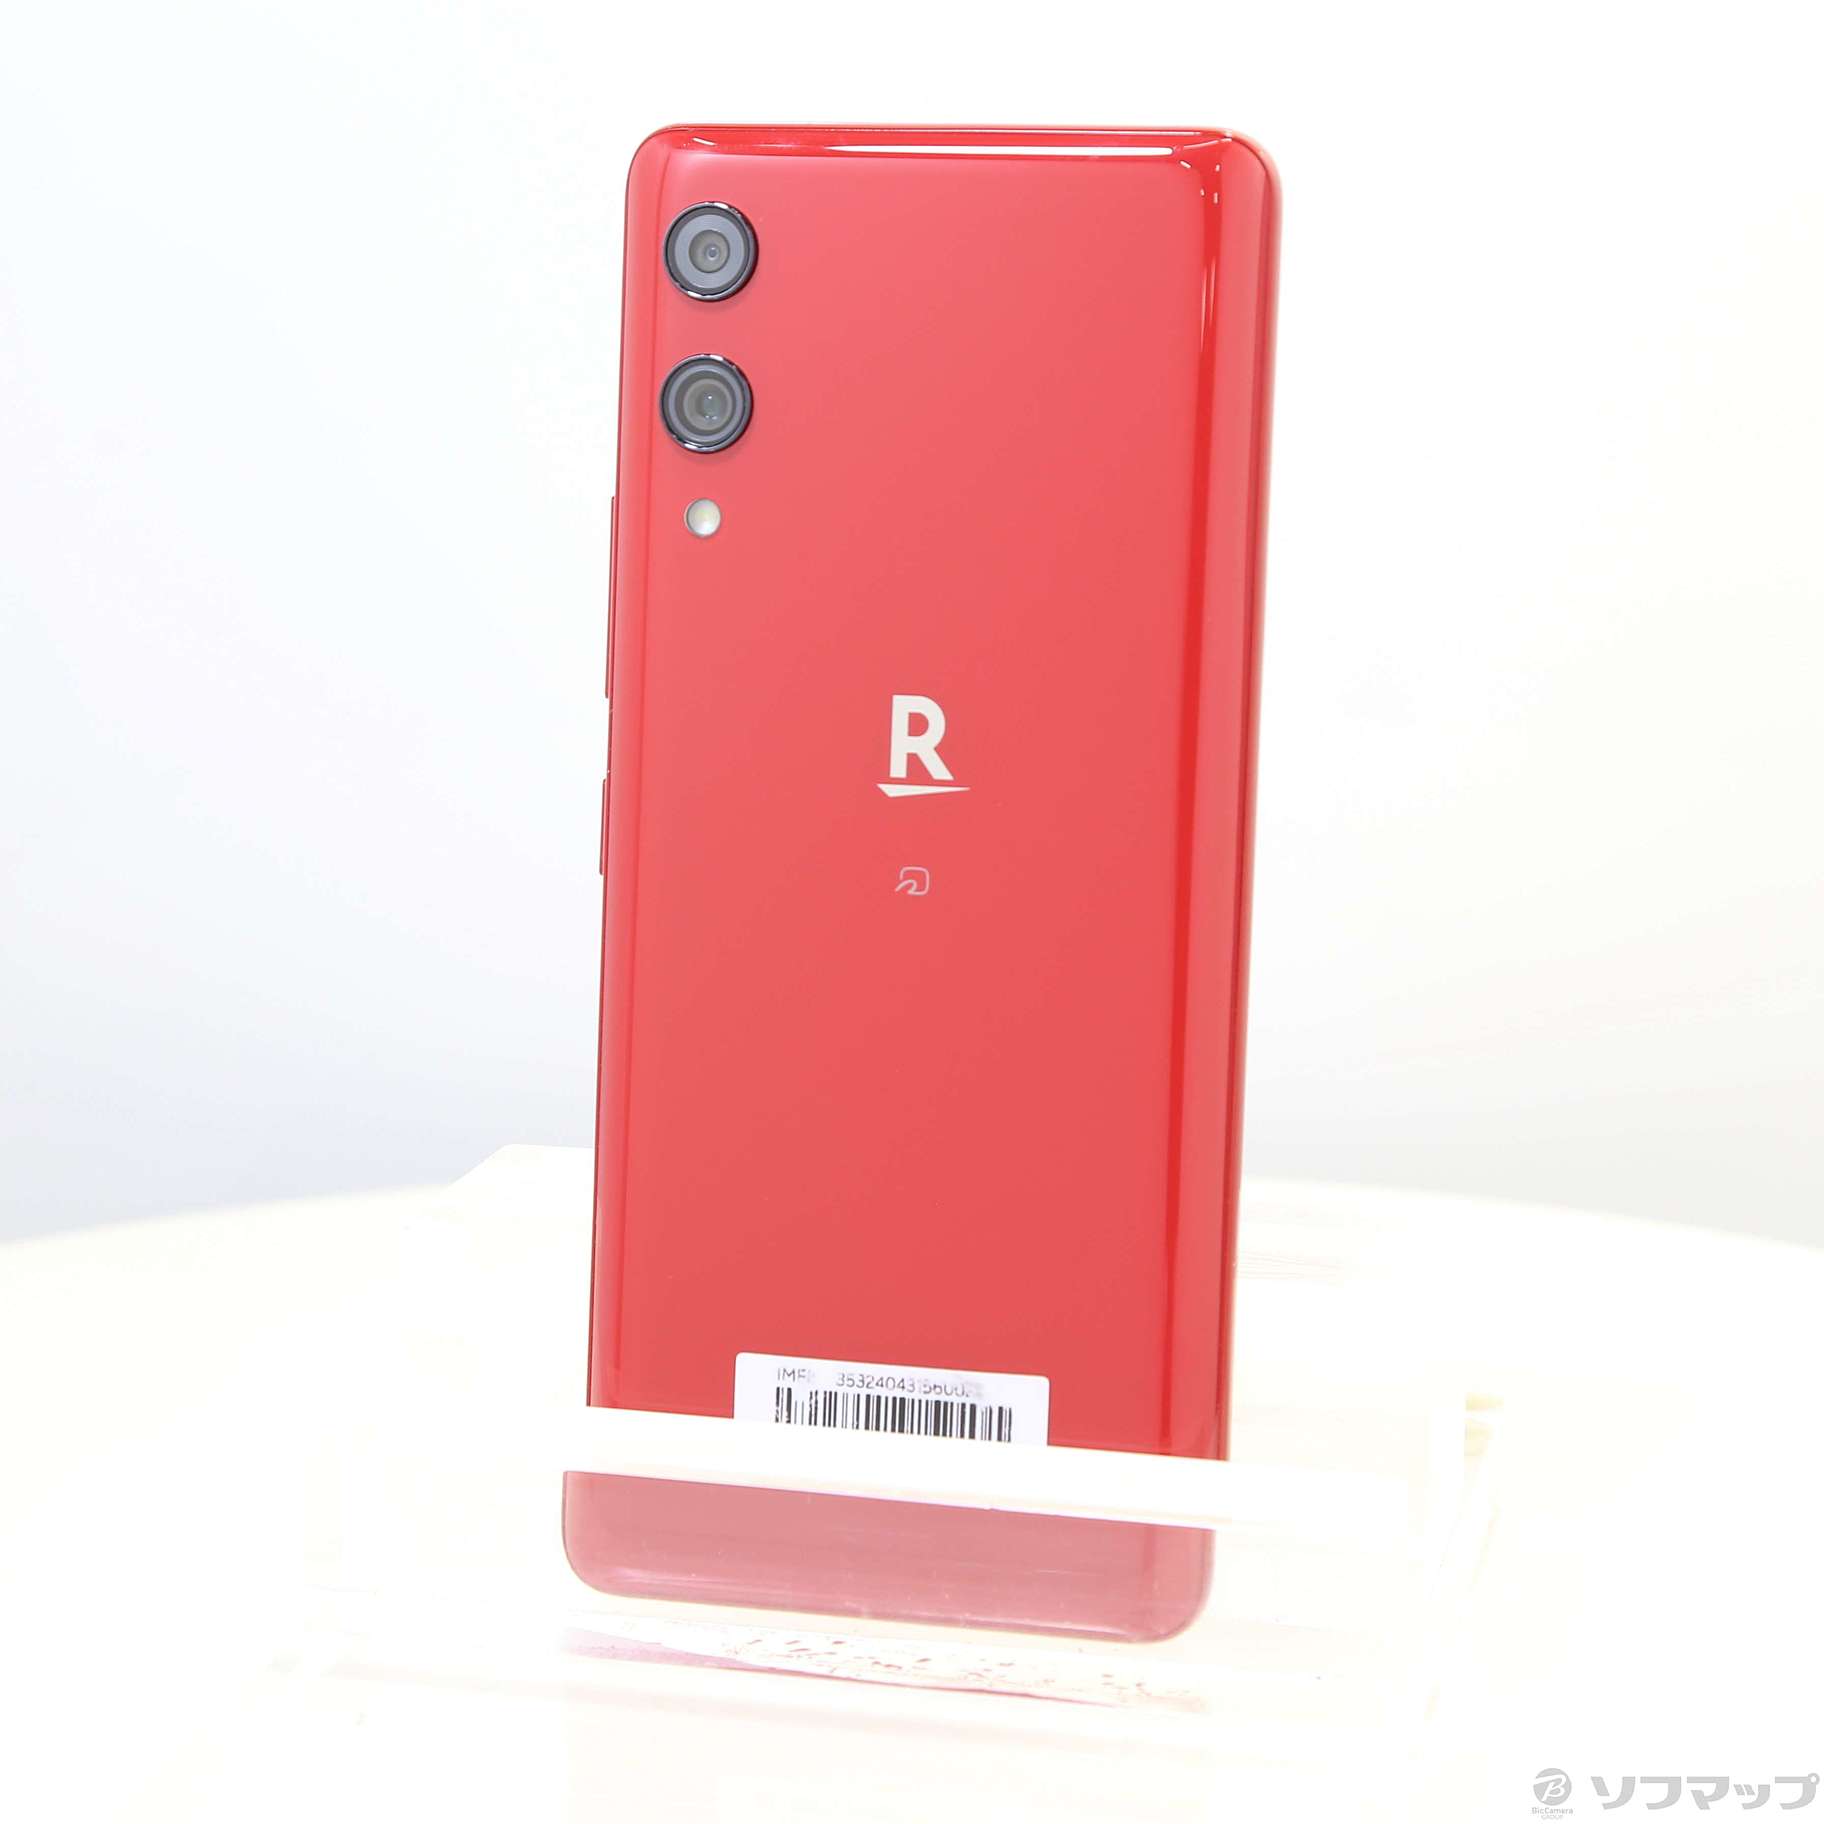 Rakuten Hand クリムゾンレッド 64 GB SIMフリー - スマートフォン本体